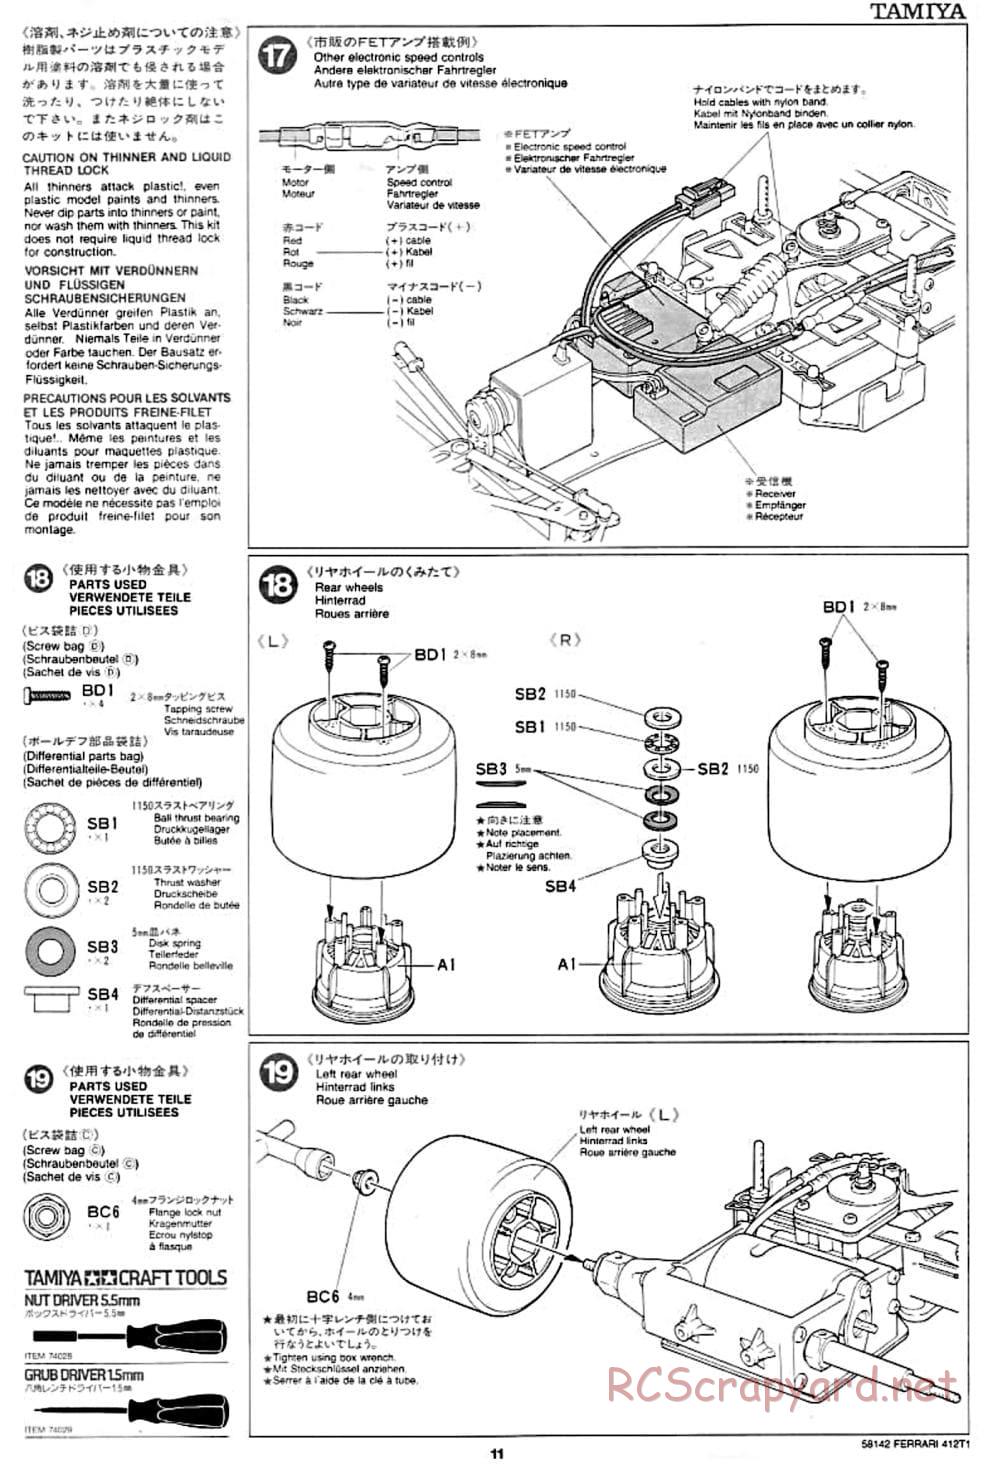 Tamiya - Ferrari 412T1 - F103 Chassis - Manual - Page 11